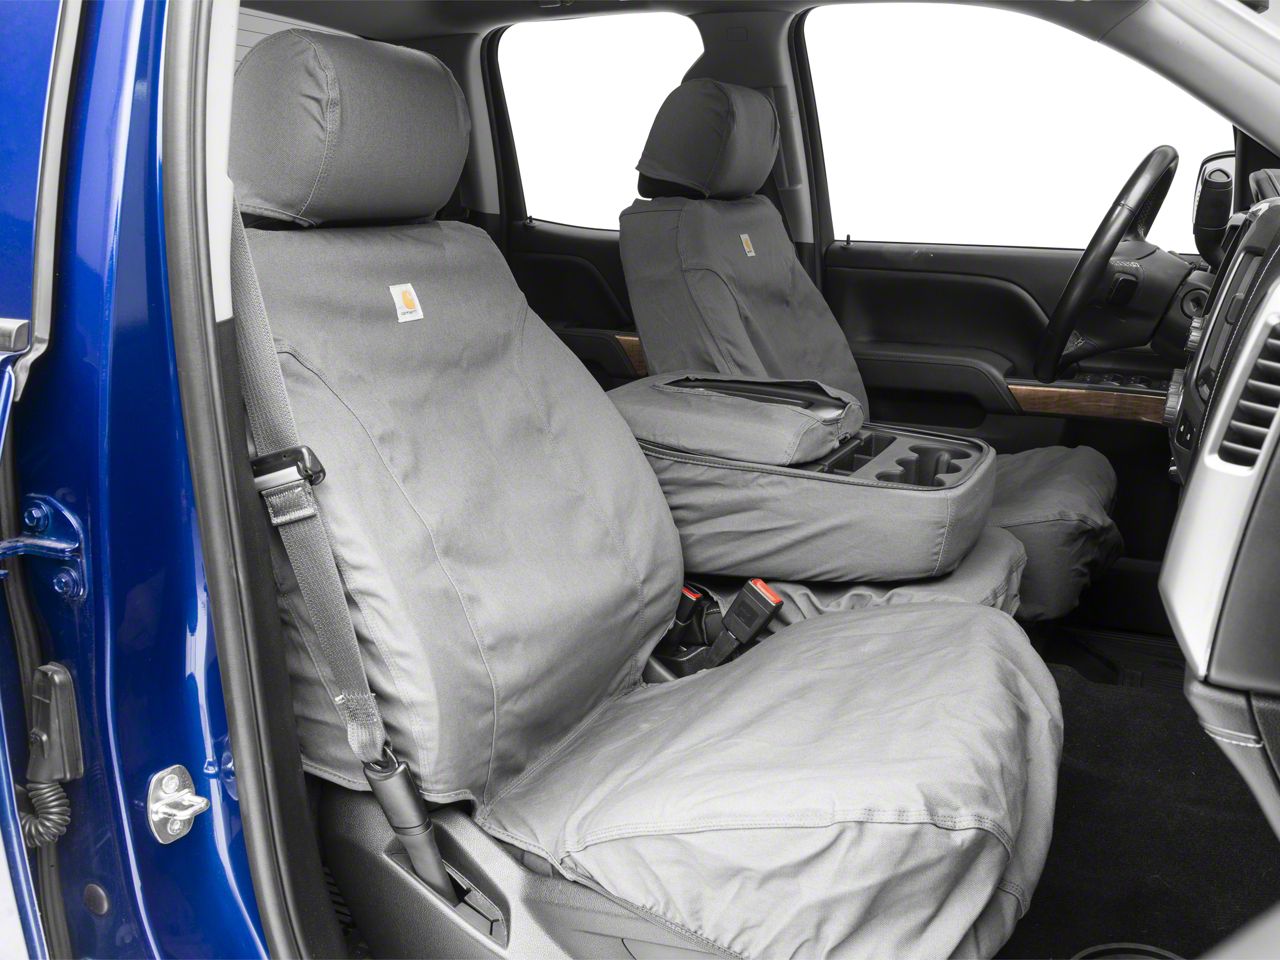 Covercraft Silverado Carhartt Seat Saver Front Covers Gravel S103818 14 18 1500 W Bench - 2007 Dodge Ram 2500 Carhartt Seat Covers